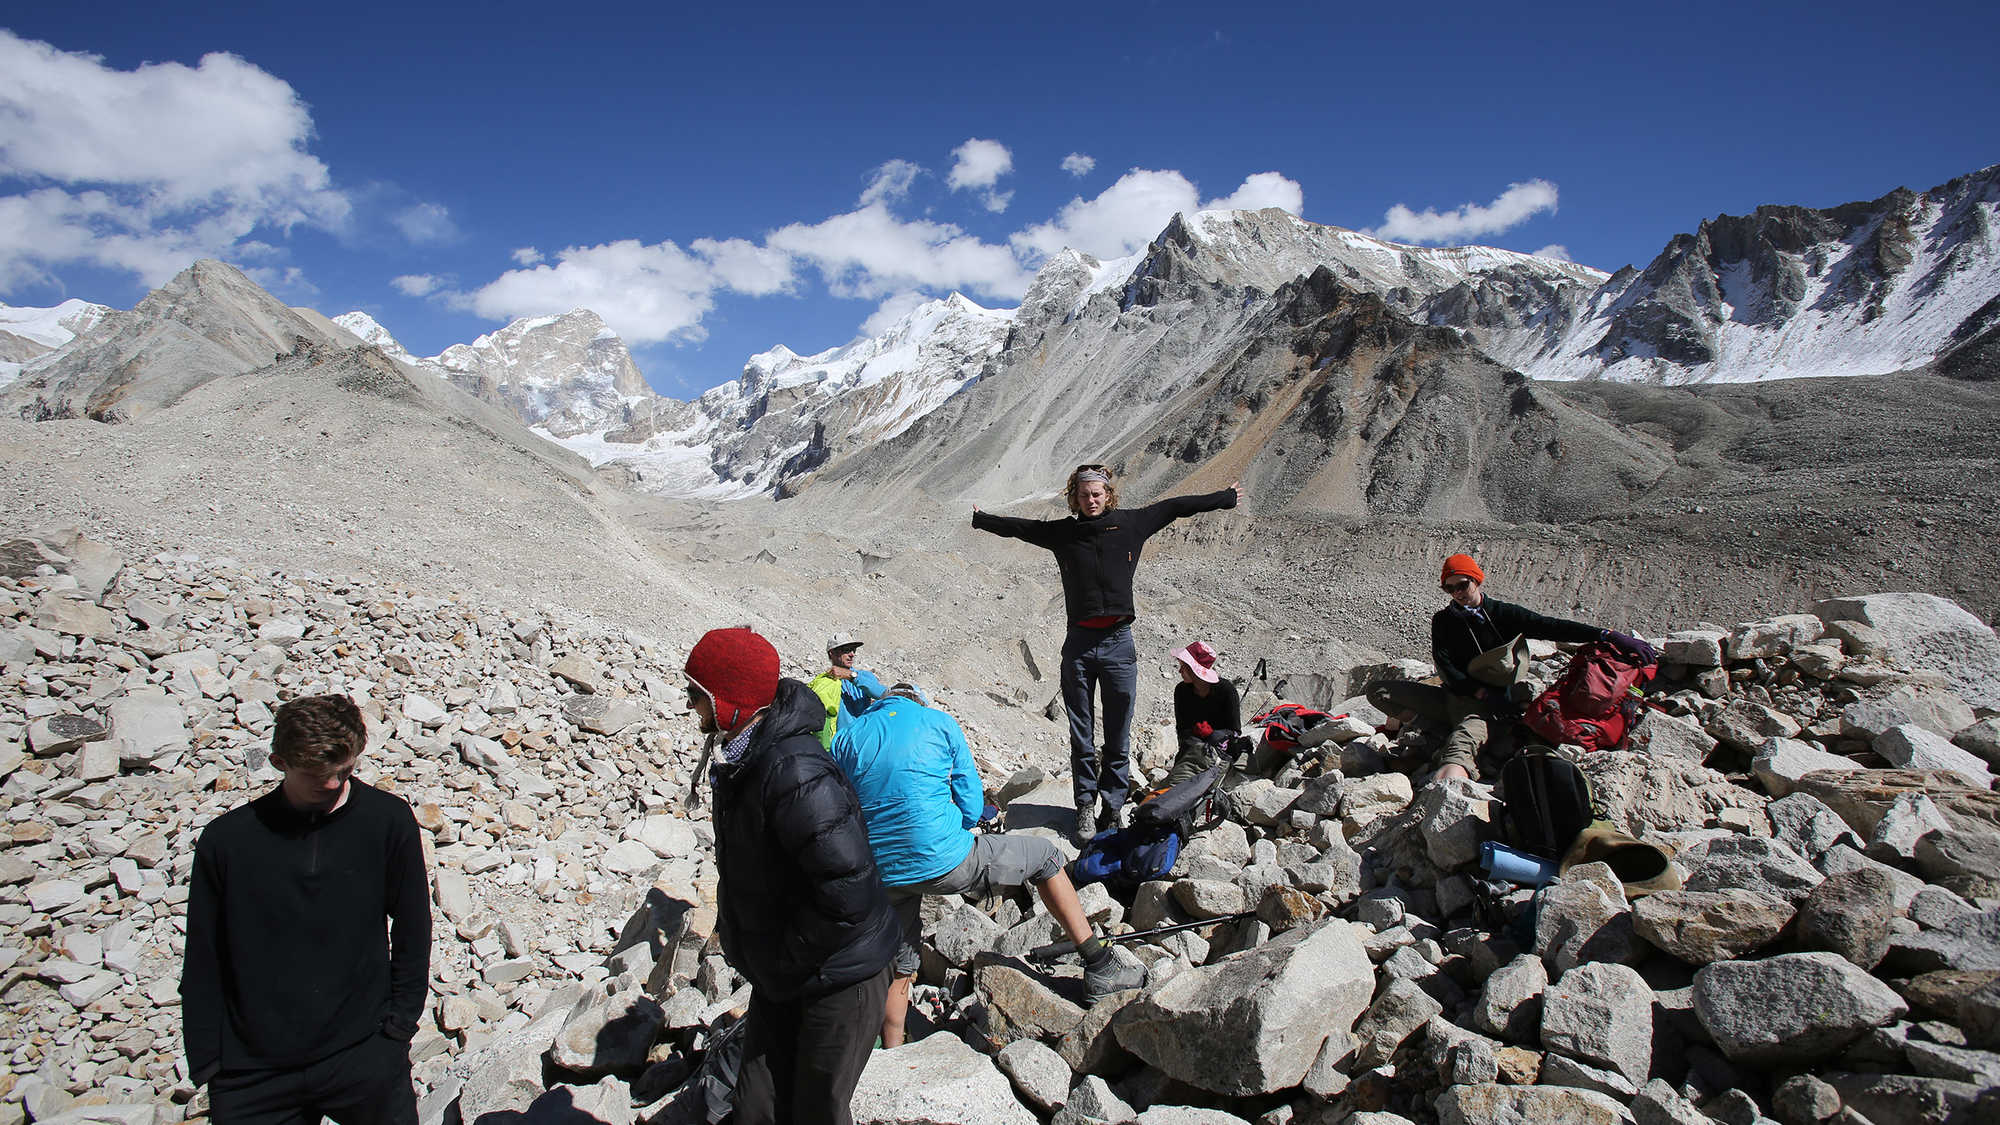 Before Everest (image 2)